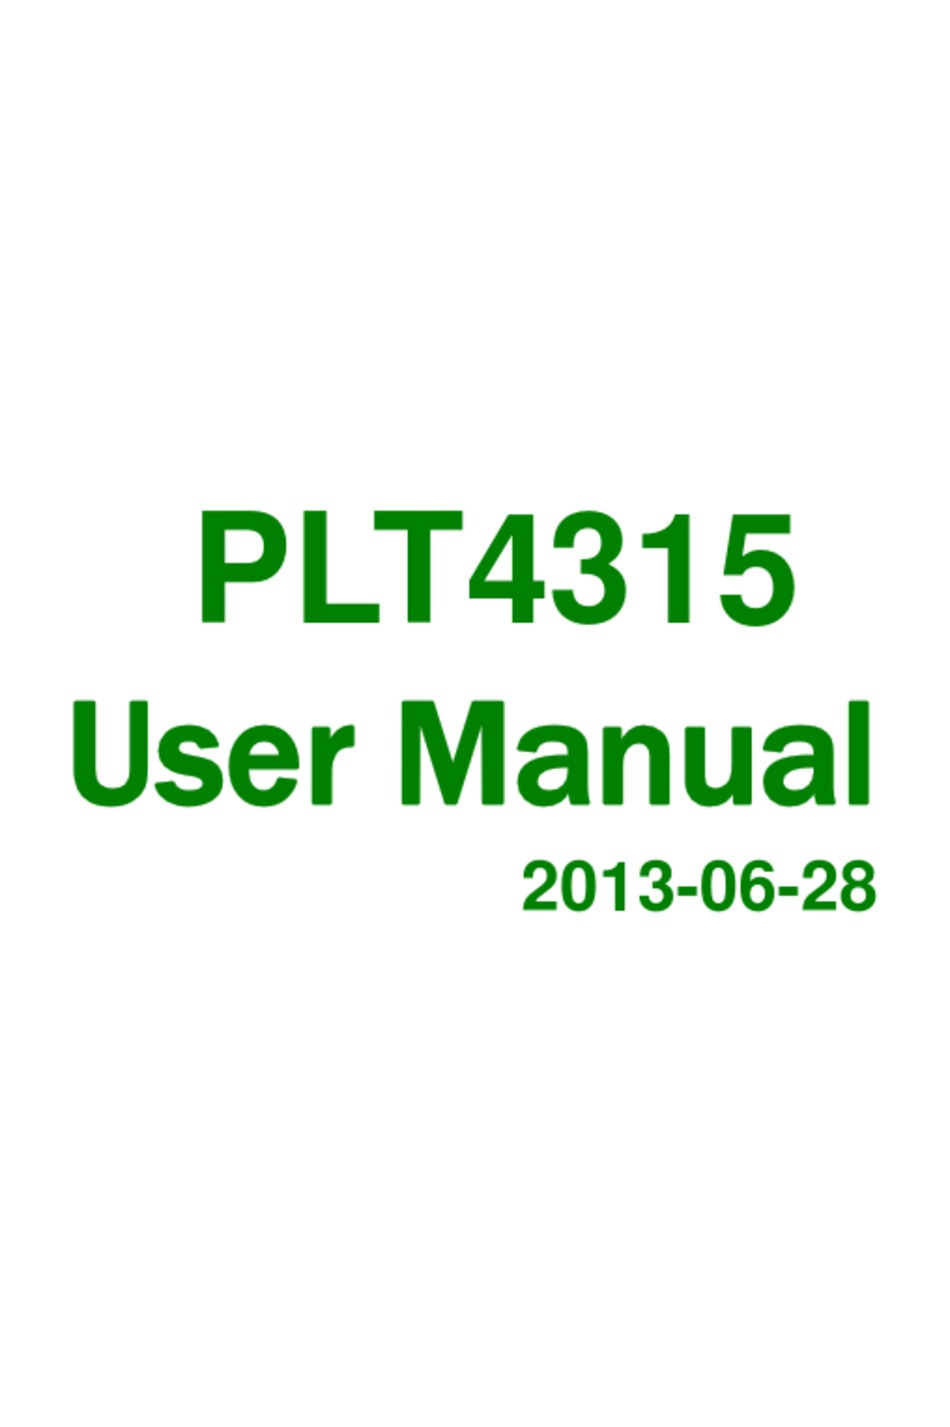 PROSCAN PLT4315 USER MANUAL Pdf Download | ManualsLib